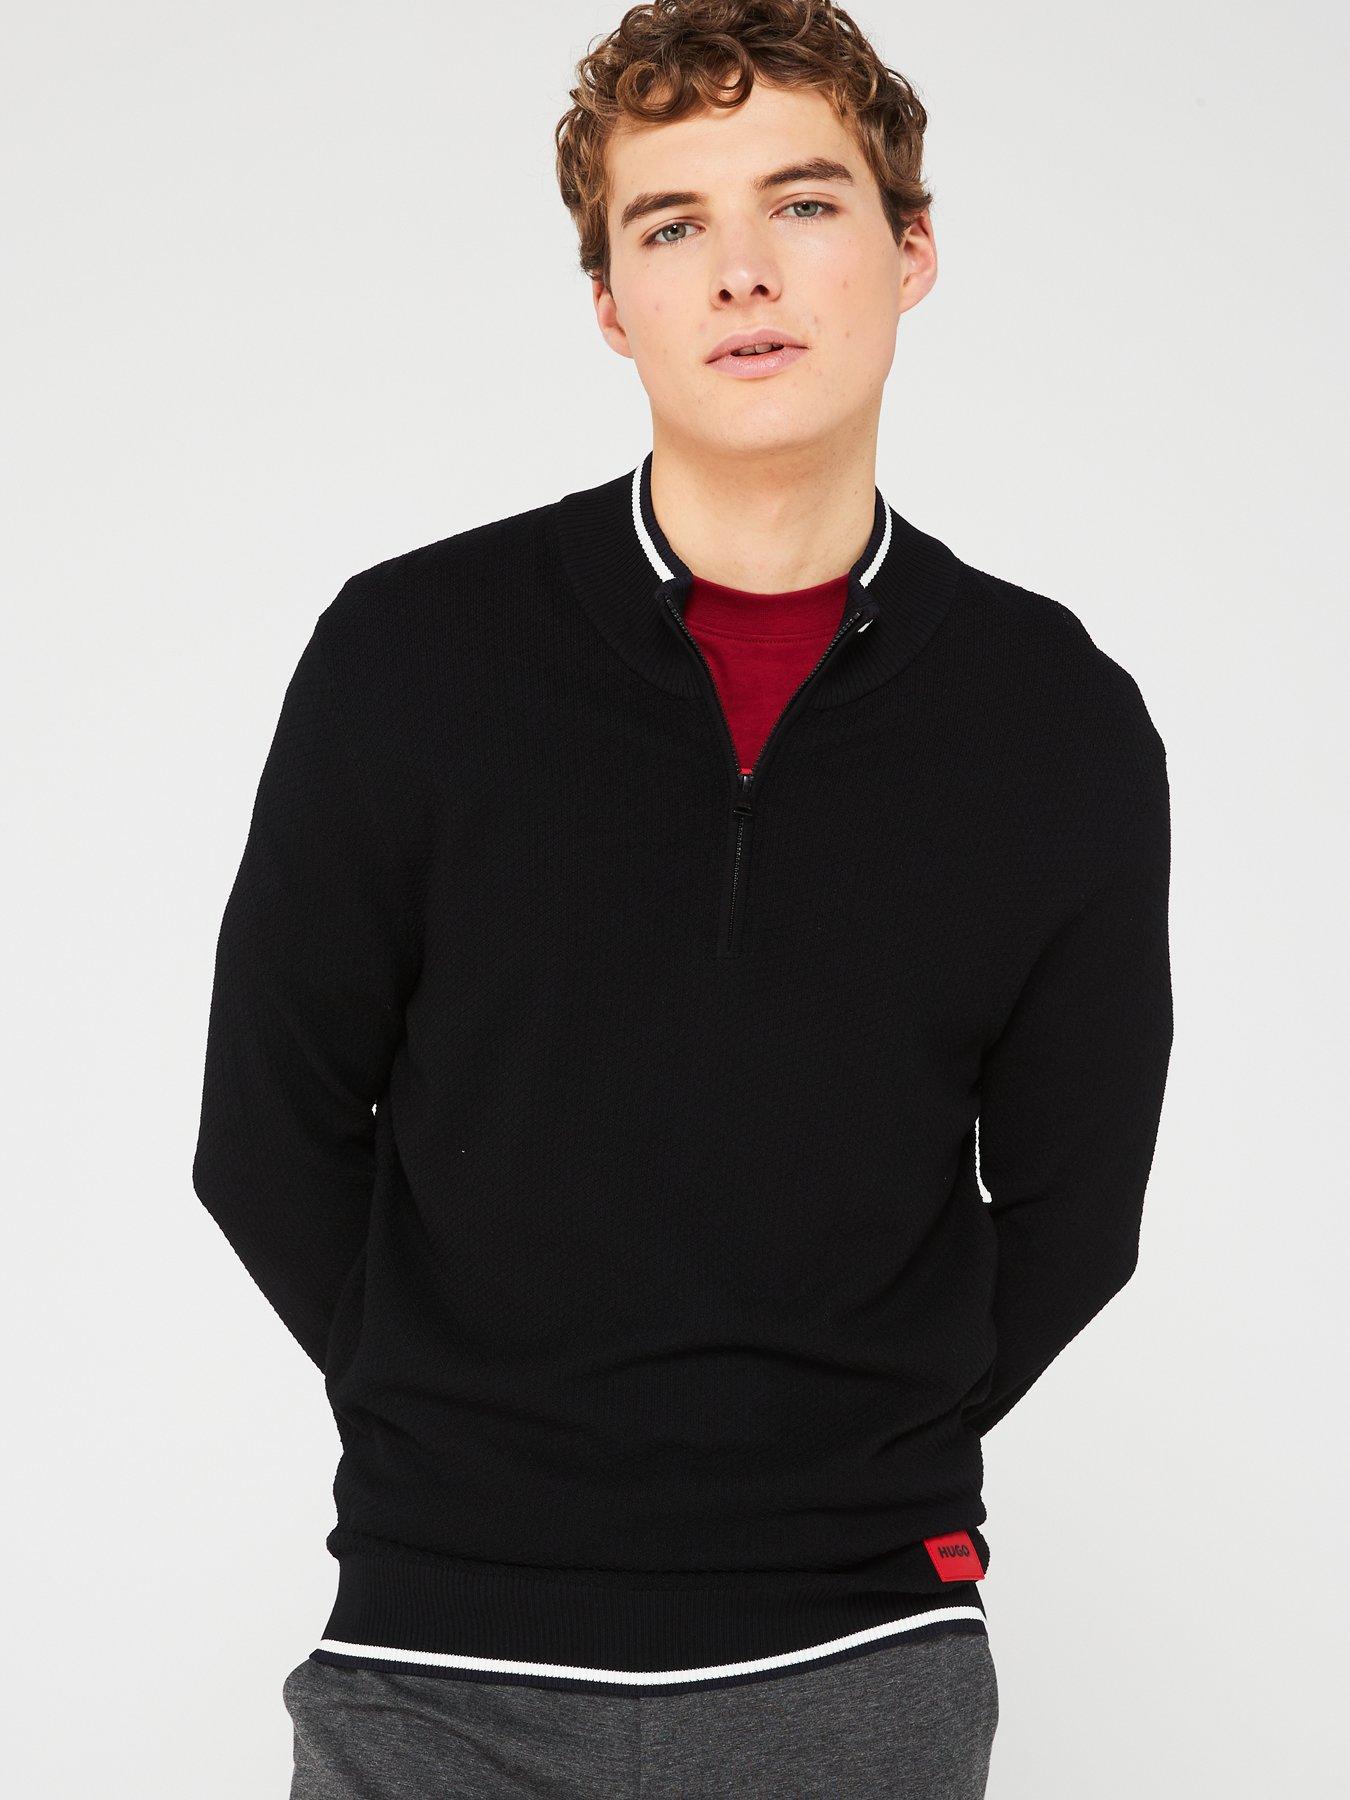 Buy Tan Brown Texture Regular Mock Shirt Knitted Crew Jumper from